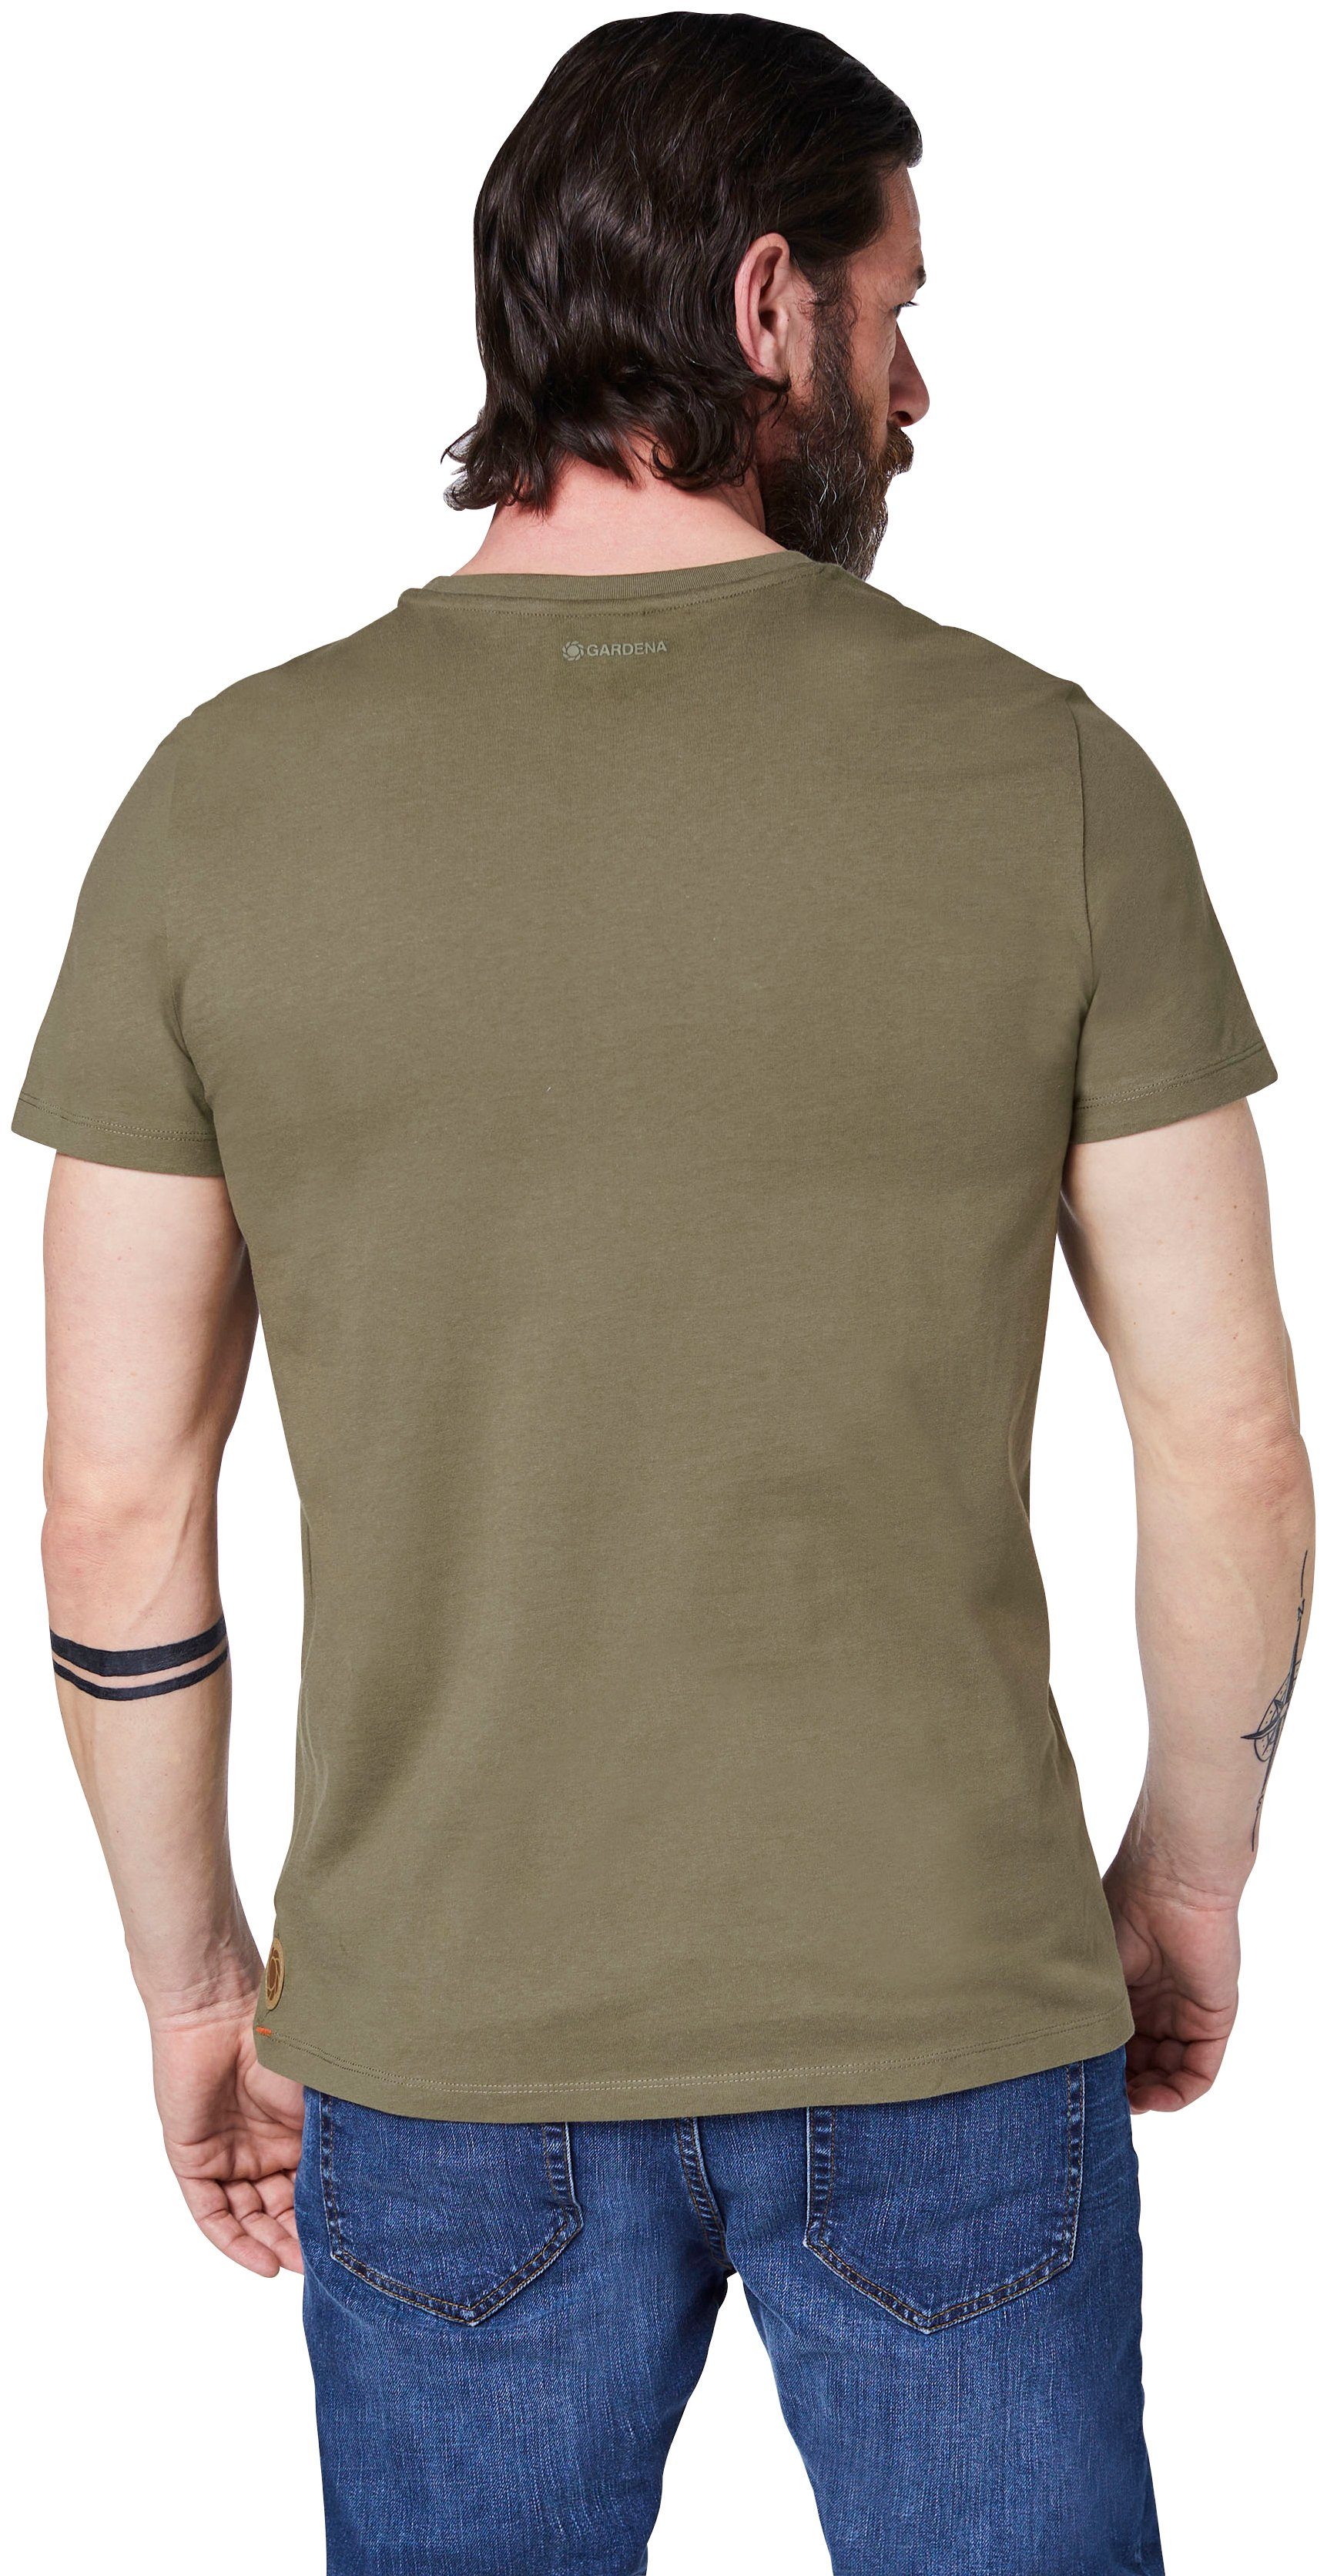 GARDENA T-Shirt Gardena-Logodruck Dusty Olive mit